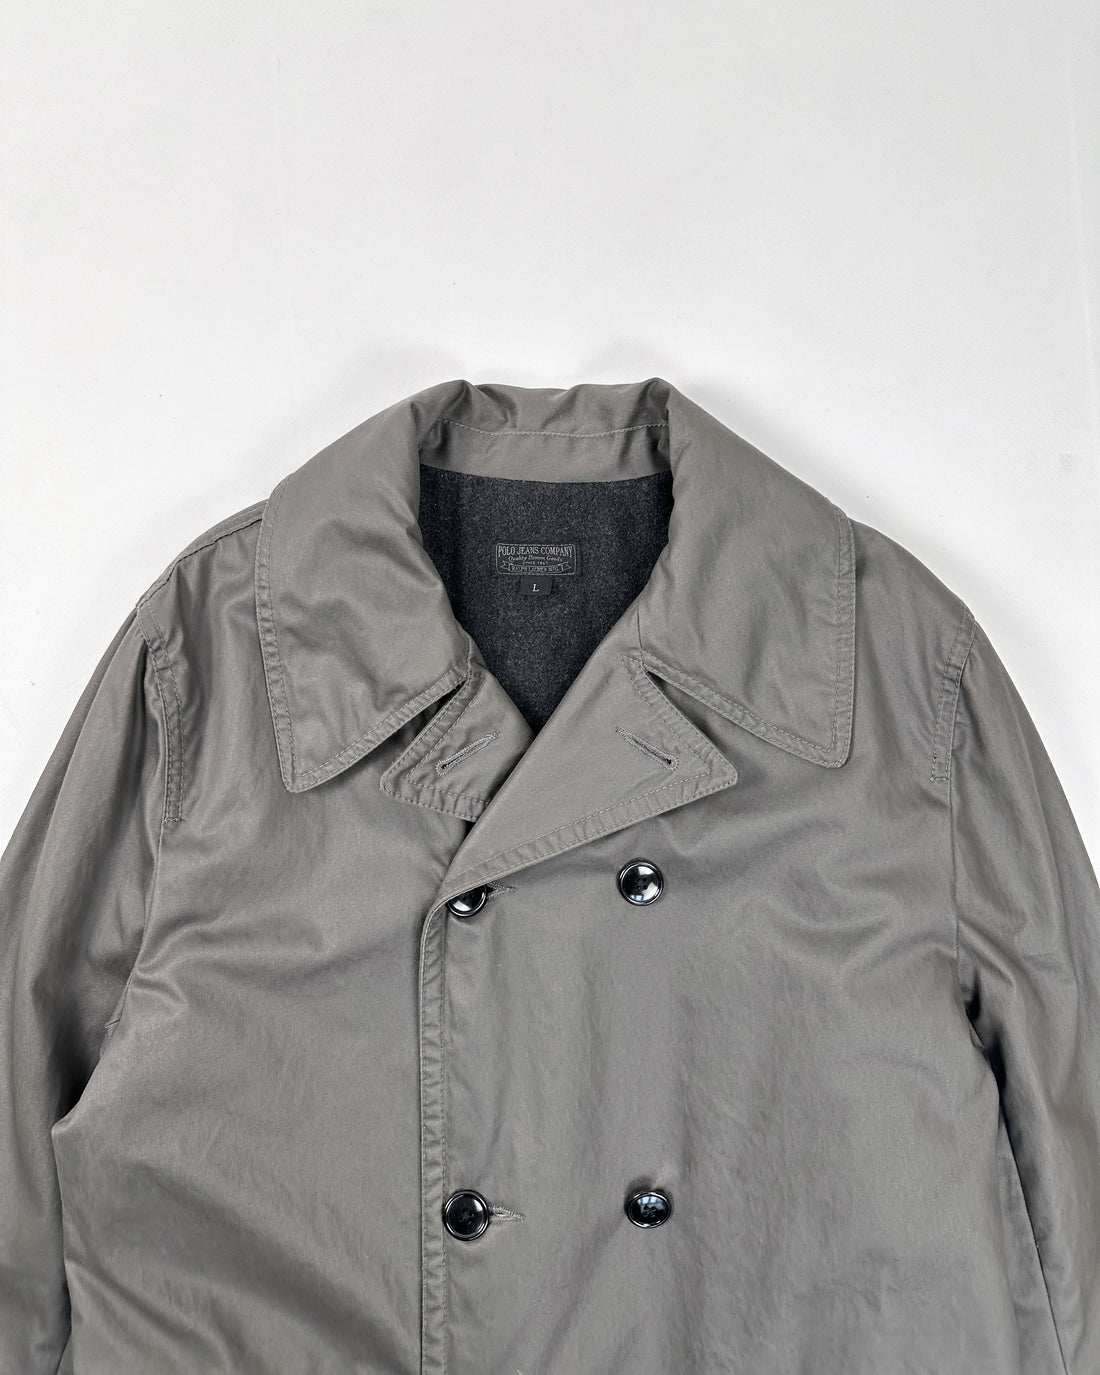 Polo Jeans Black Label Waxed Cross Jacket 2000's